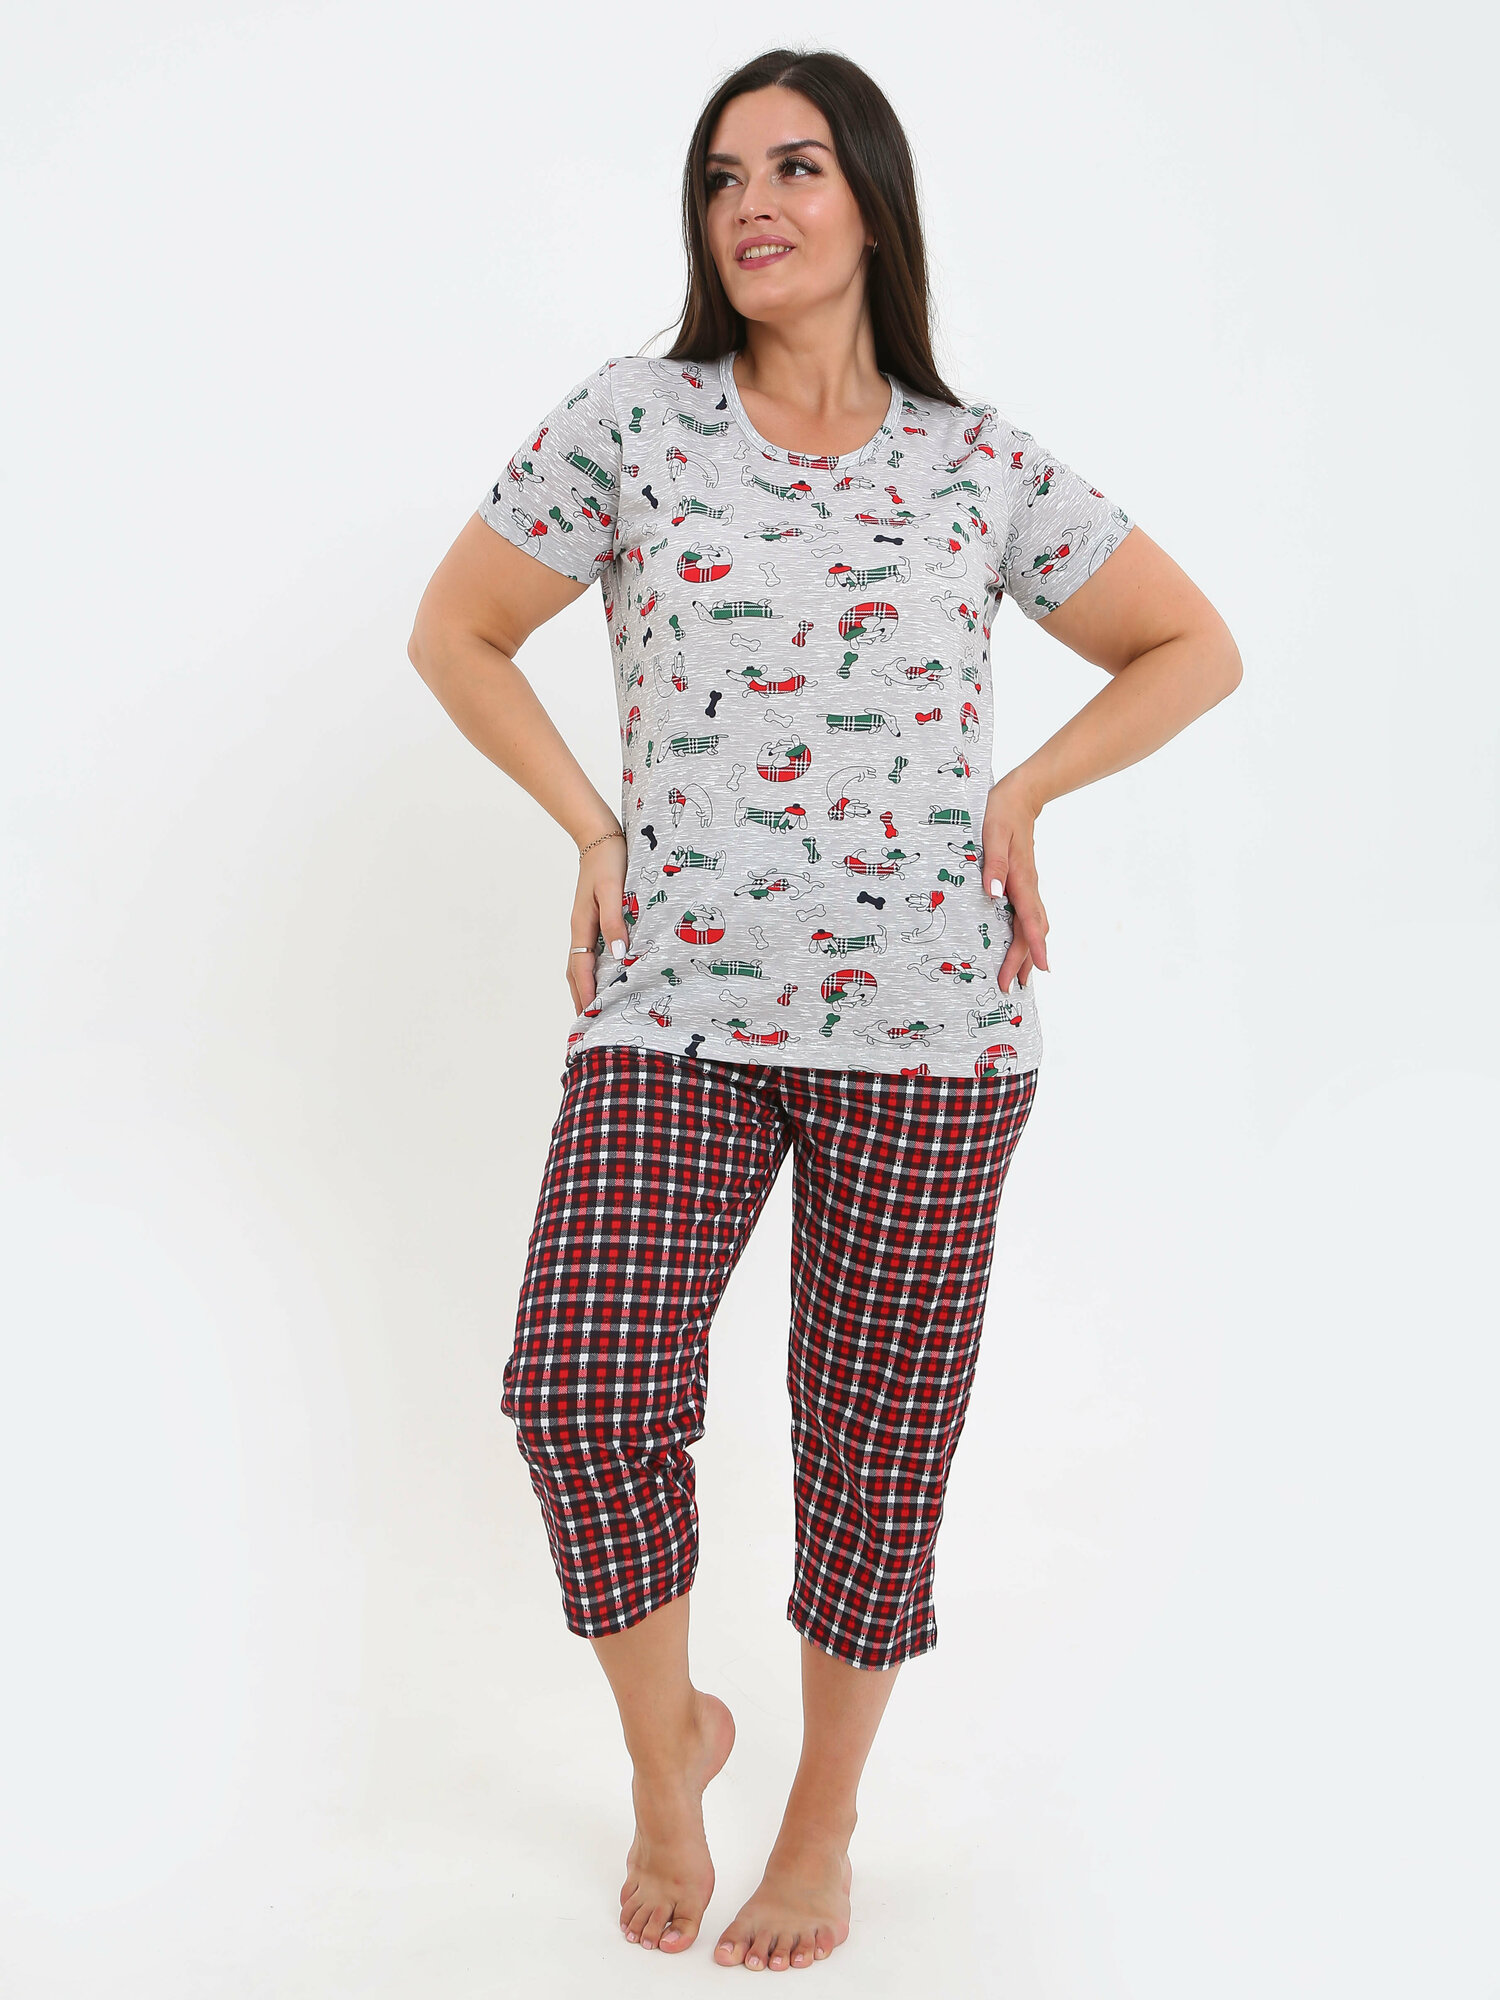 Пижама Soft Home, футболка, бриджи, короткий рукав, трикотажная, карманы, размер 52, серый - фотография № 4